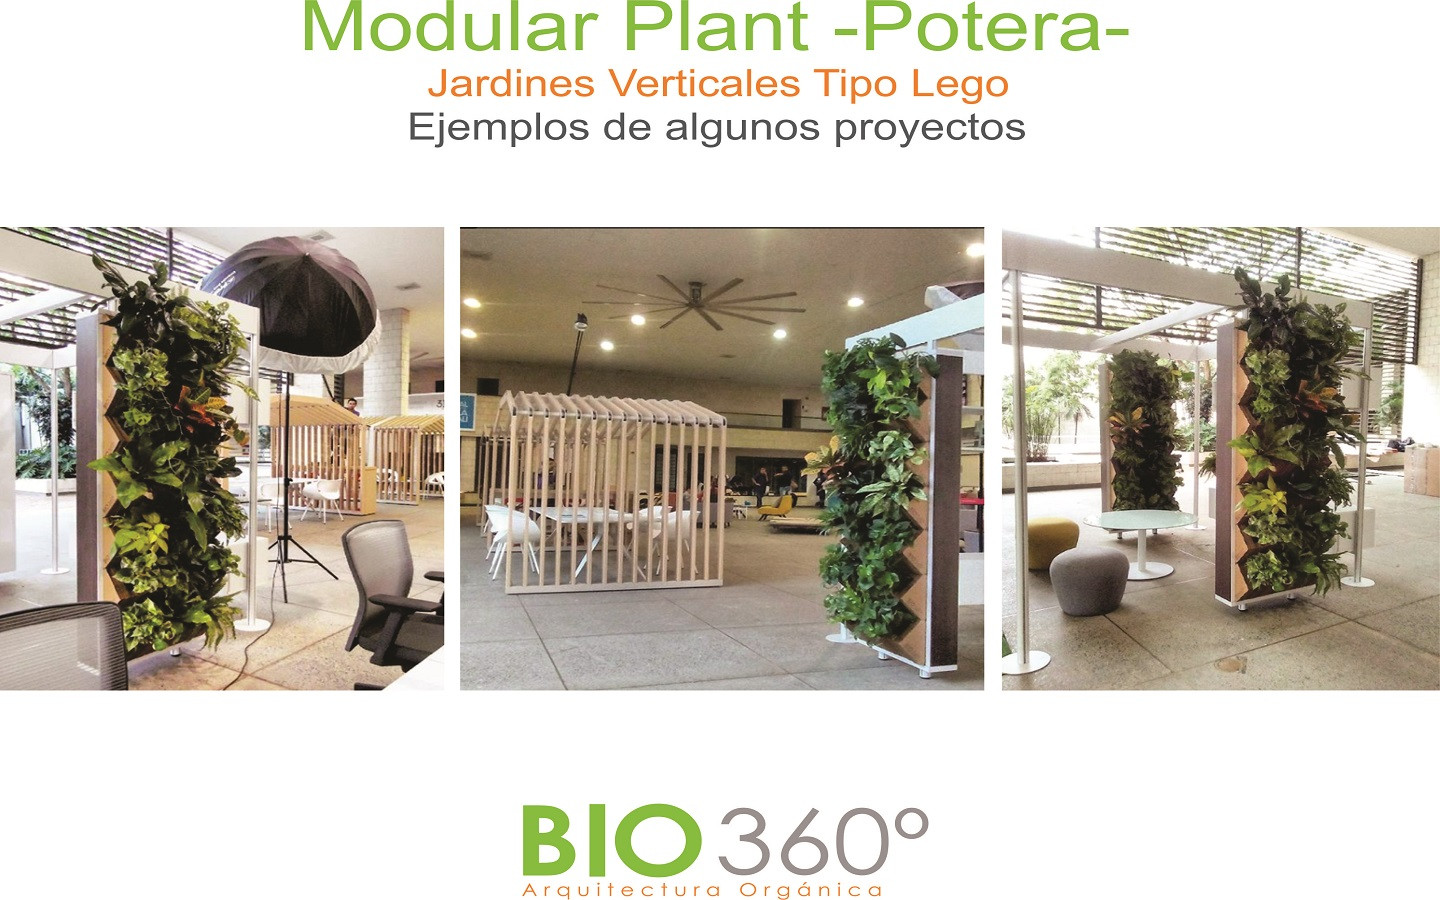 Modular Plant